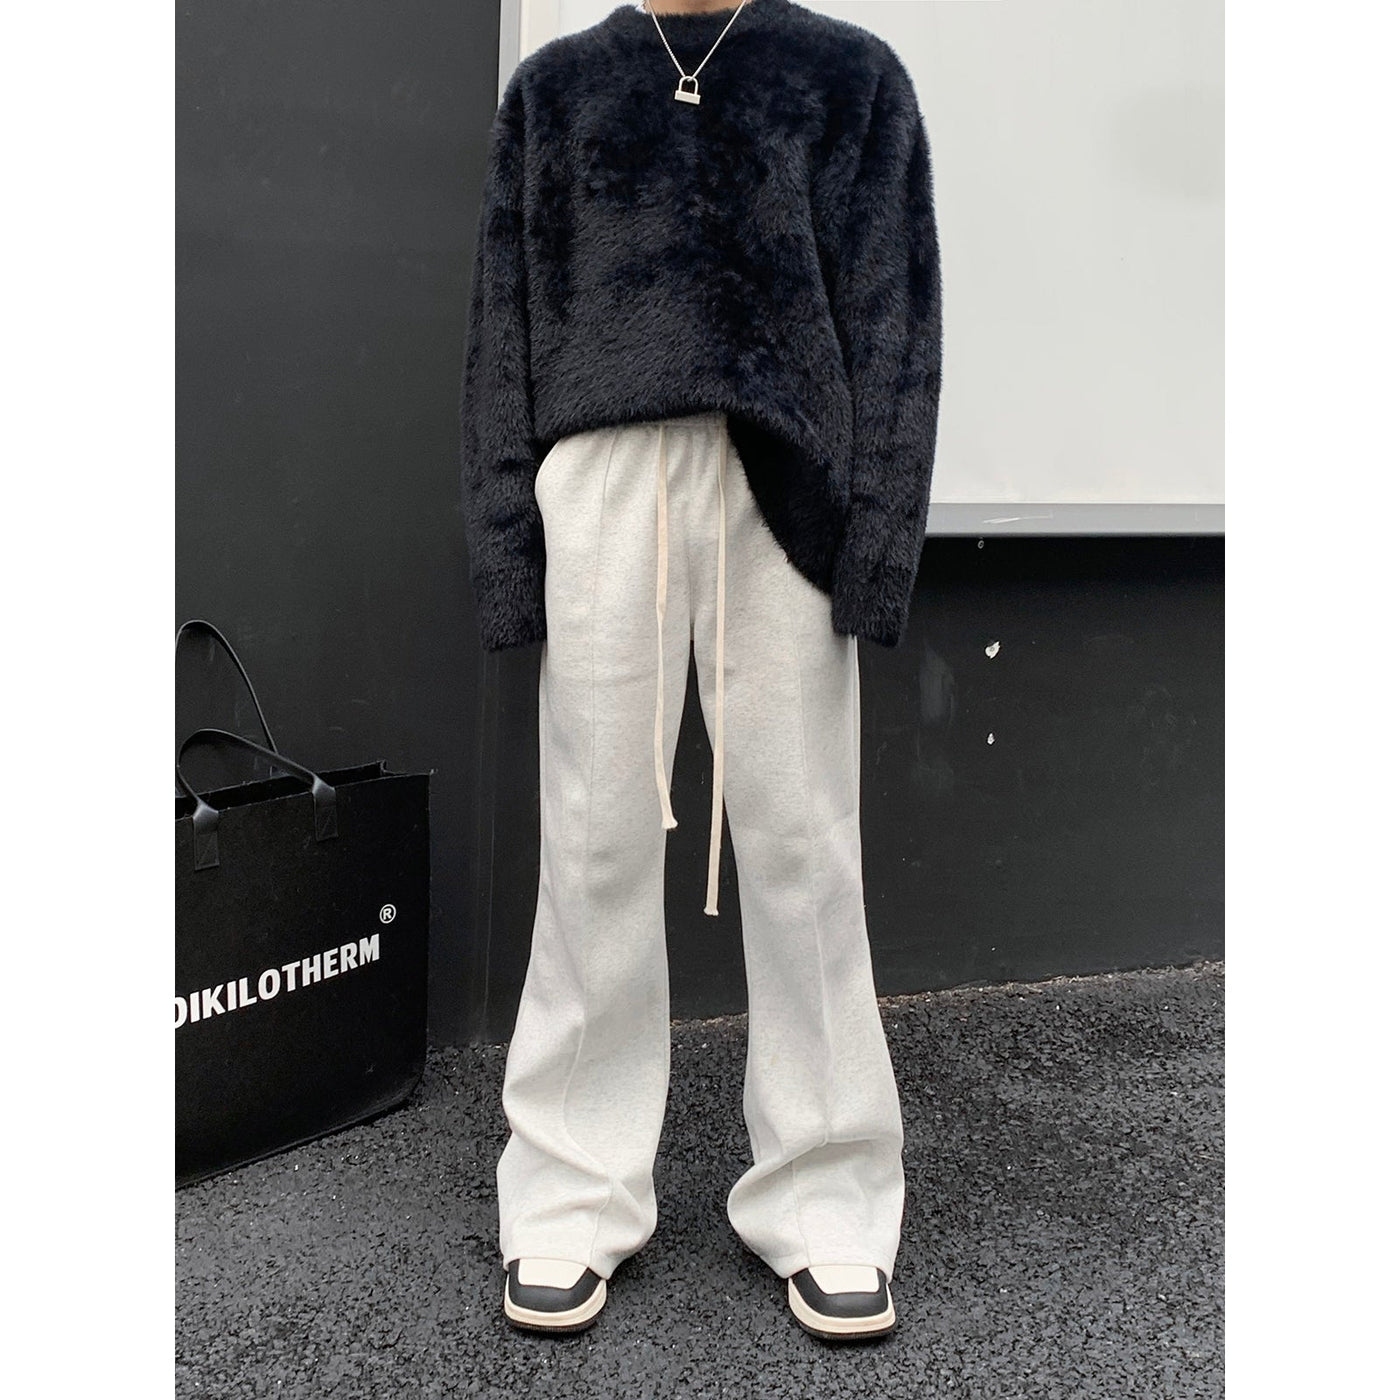 Wide Leg Sweatpants Korean Street Fashion Pants By Poikilotherm Shop Online at OH Vault